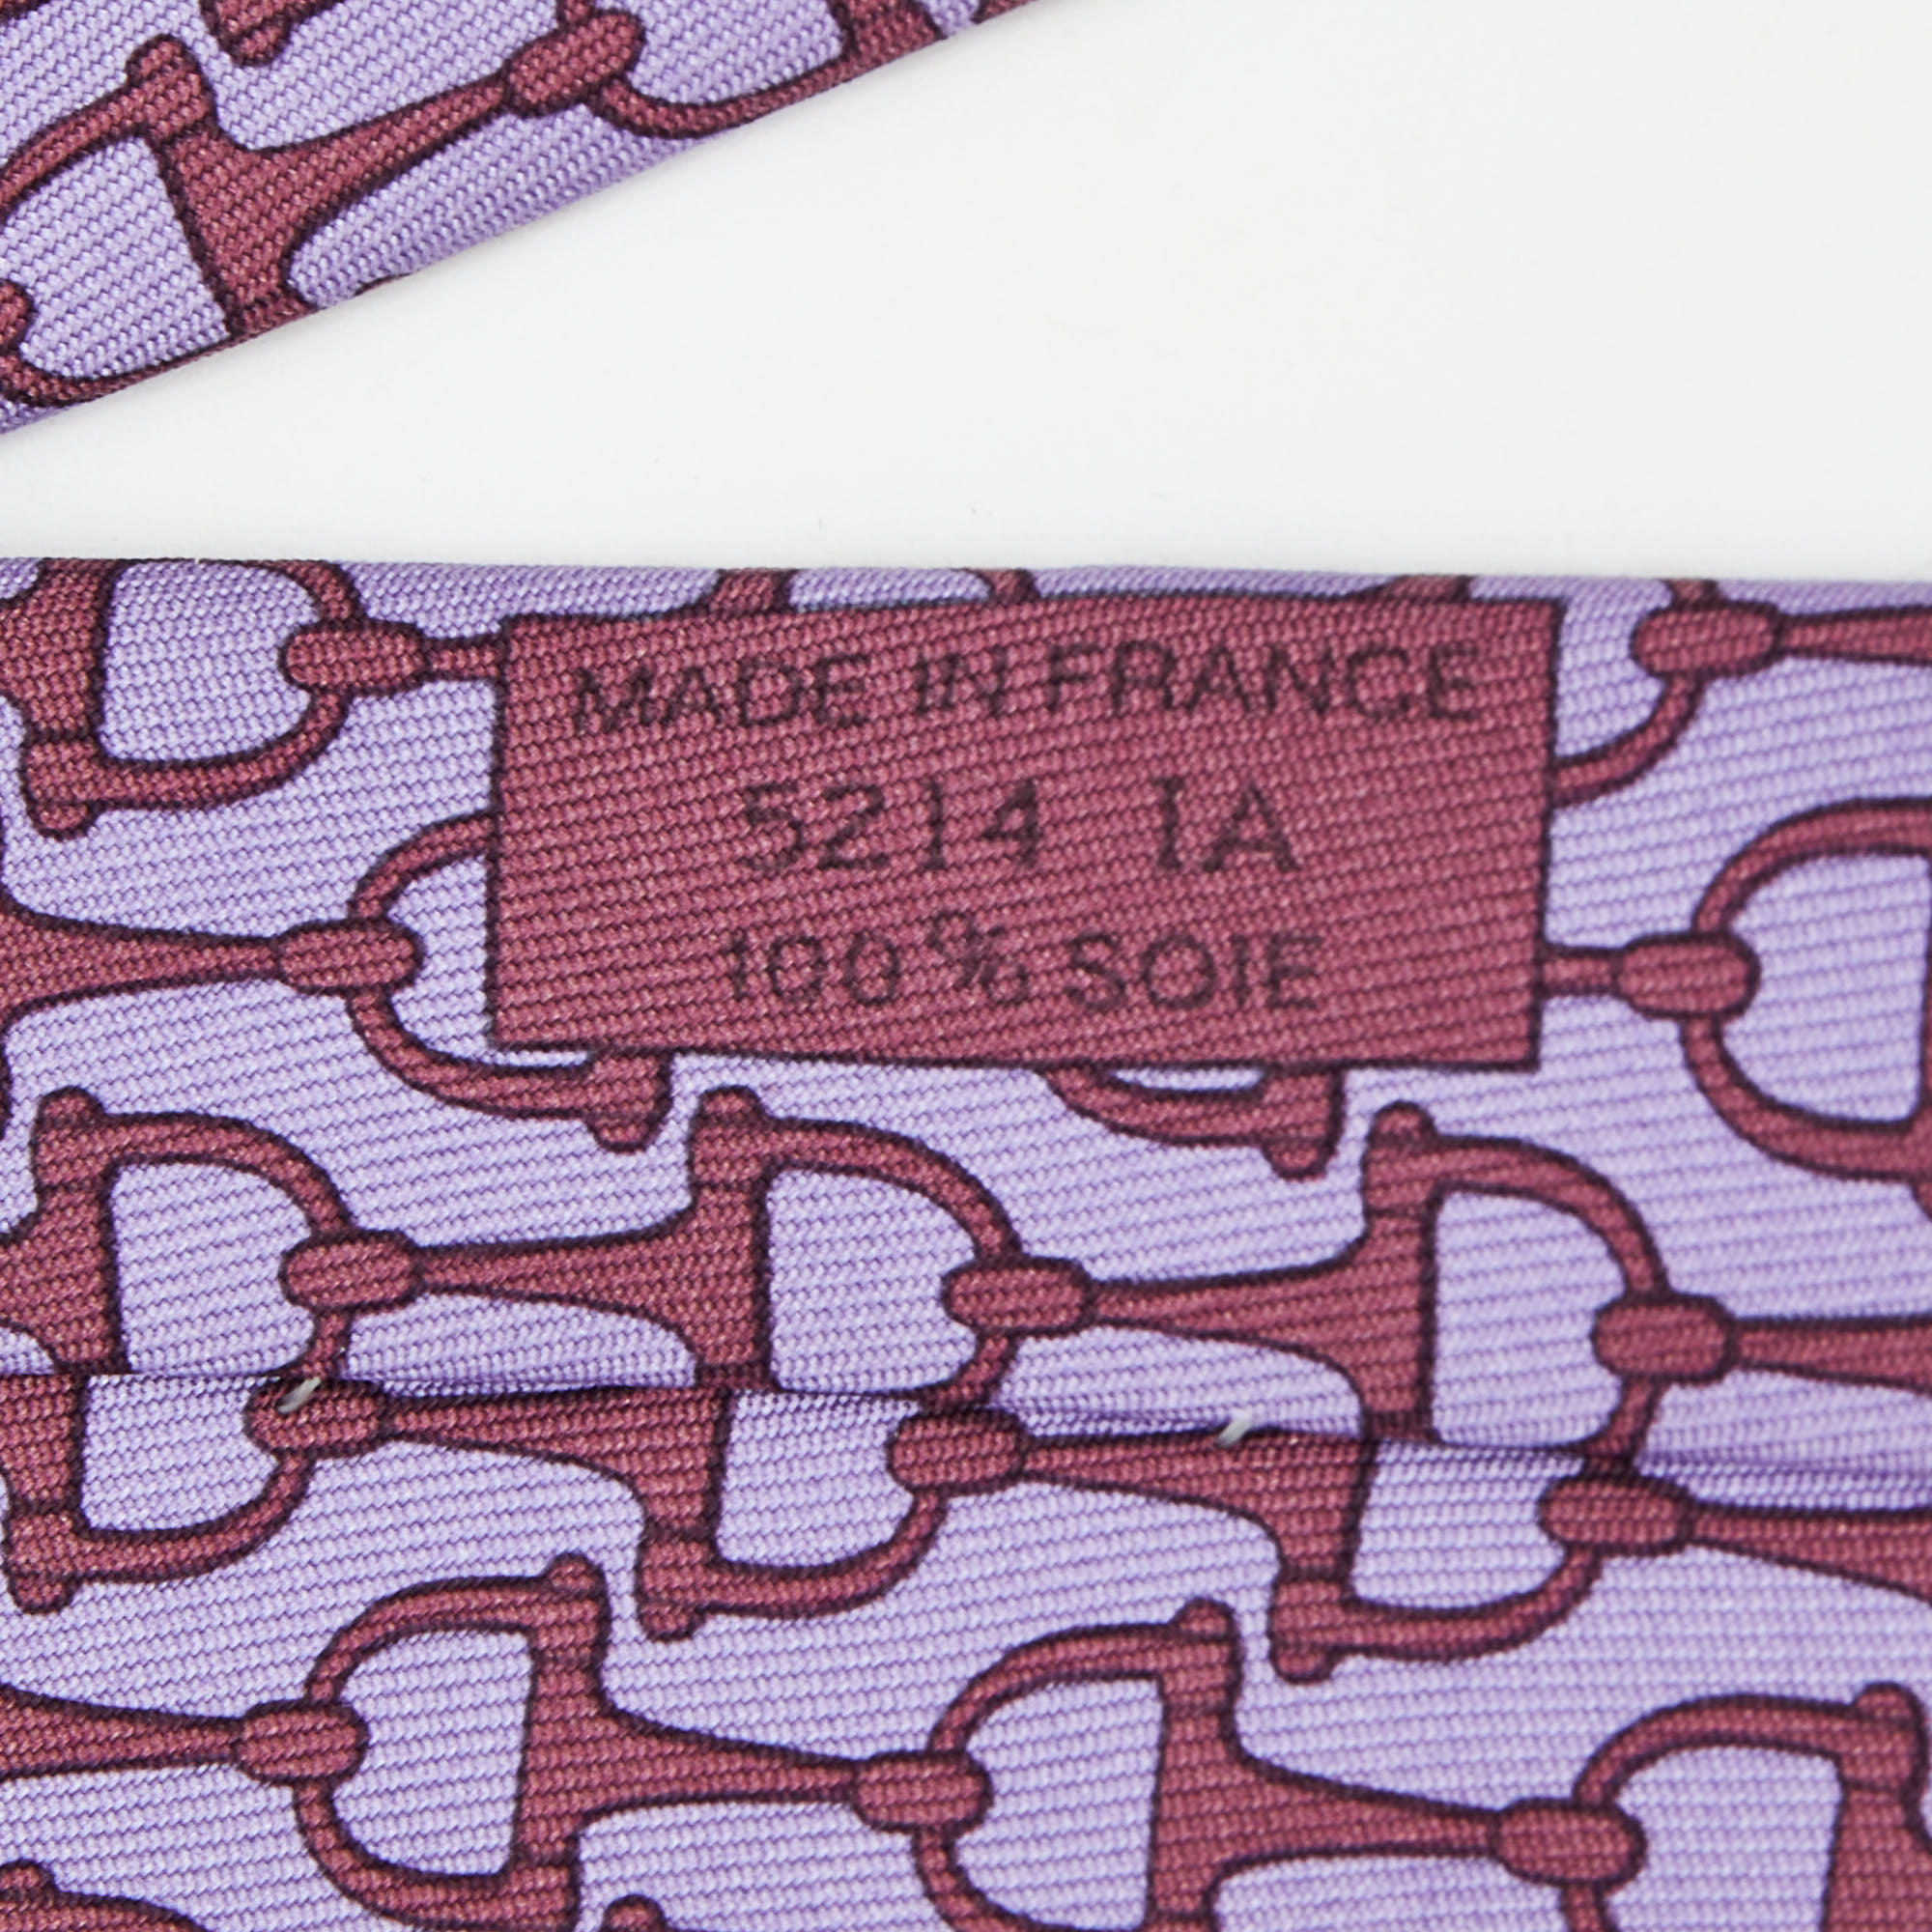 Hermes Purple Horsebit Print Silk Traditional Tie